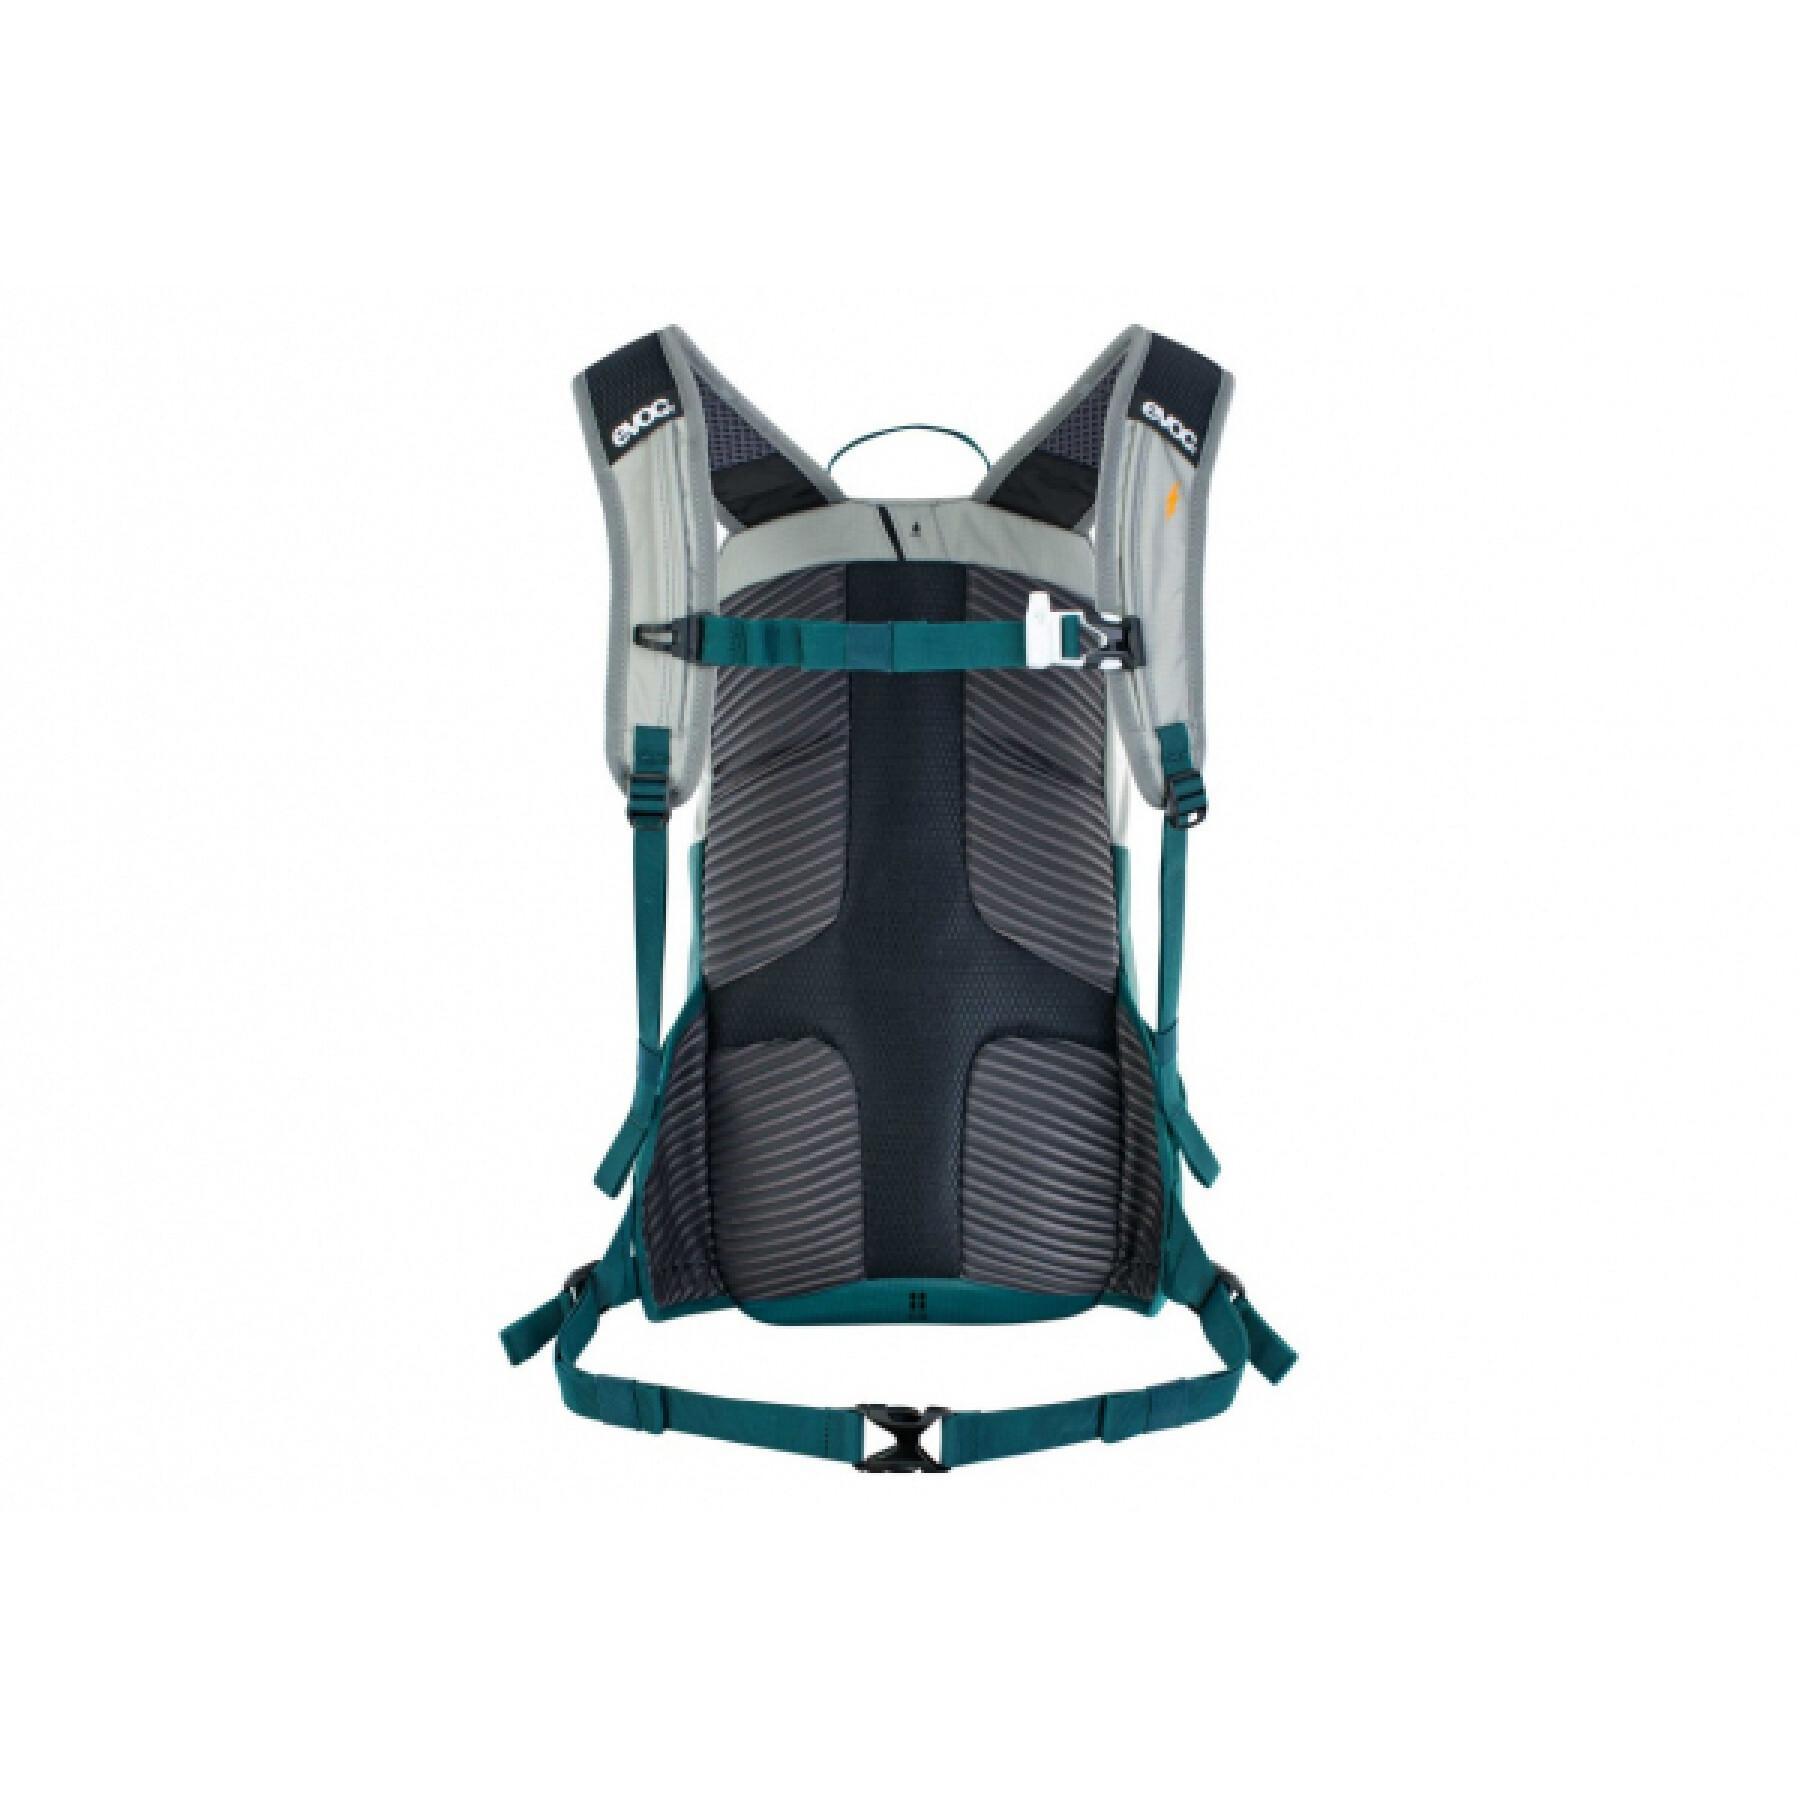 Backpack Evoc e-ride